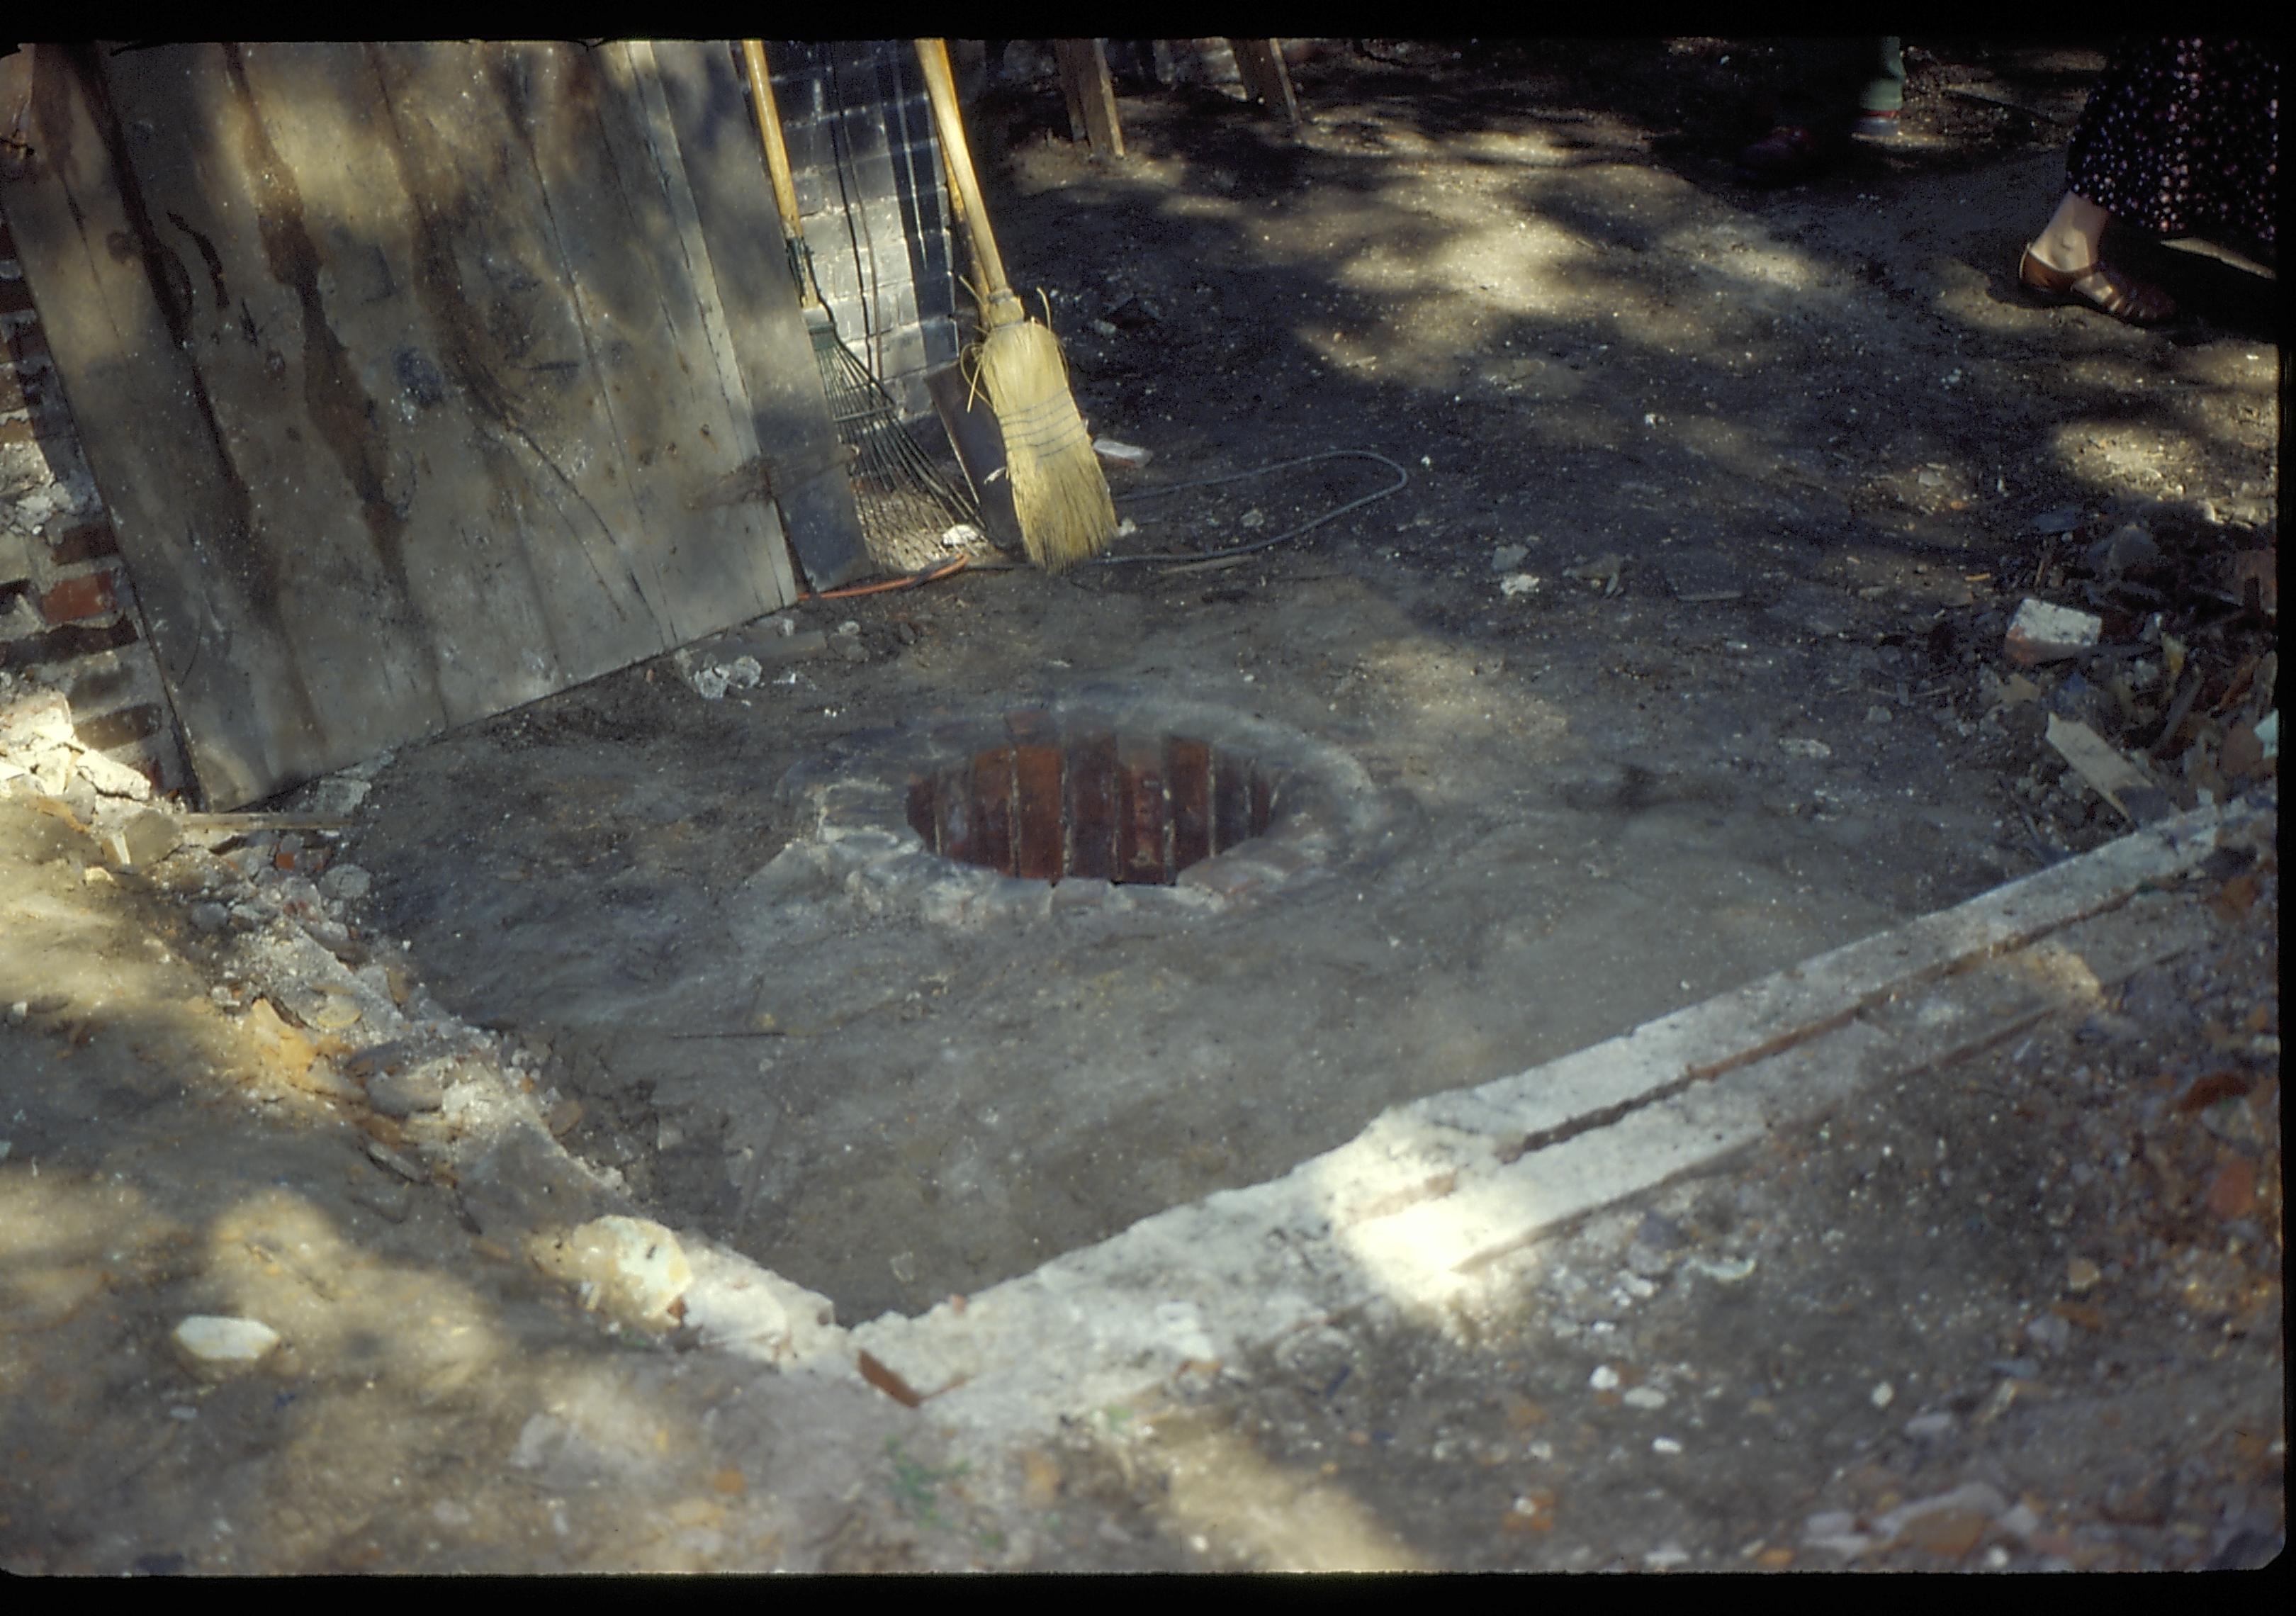 Foundation- cistern LIHO NHS- Arnold House, HS-20 Roll #4 7/23-7/26/96, exp 12 Arnold House, restoration